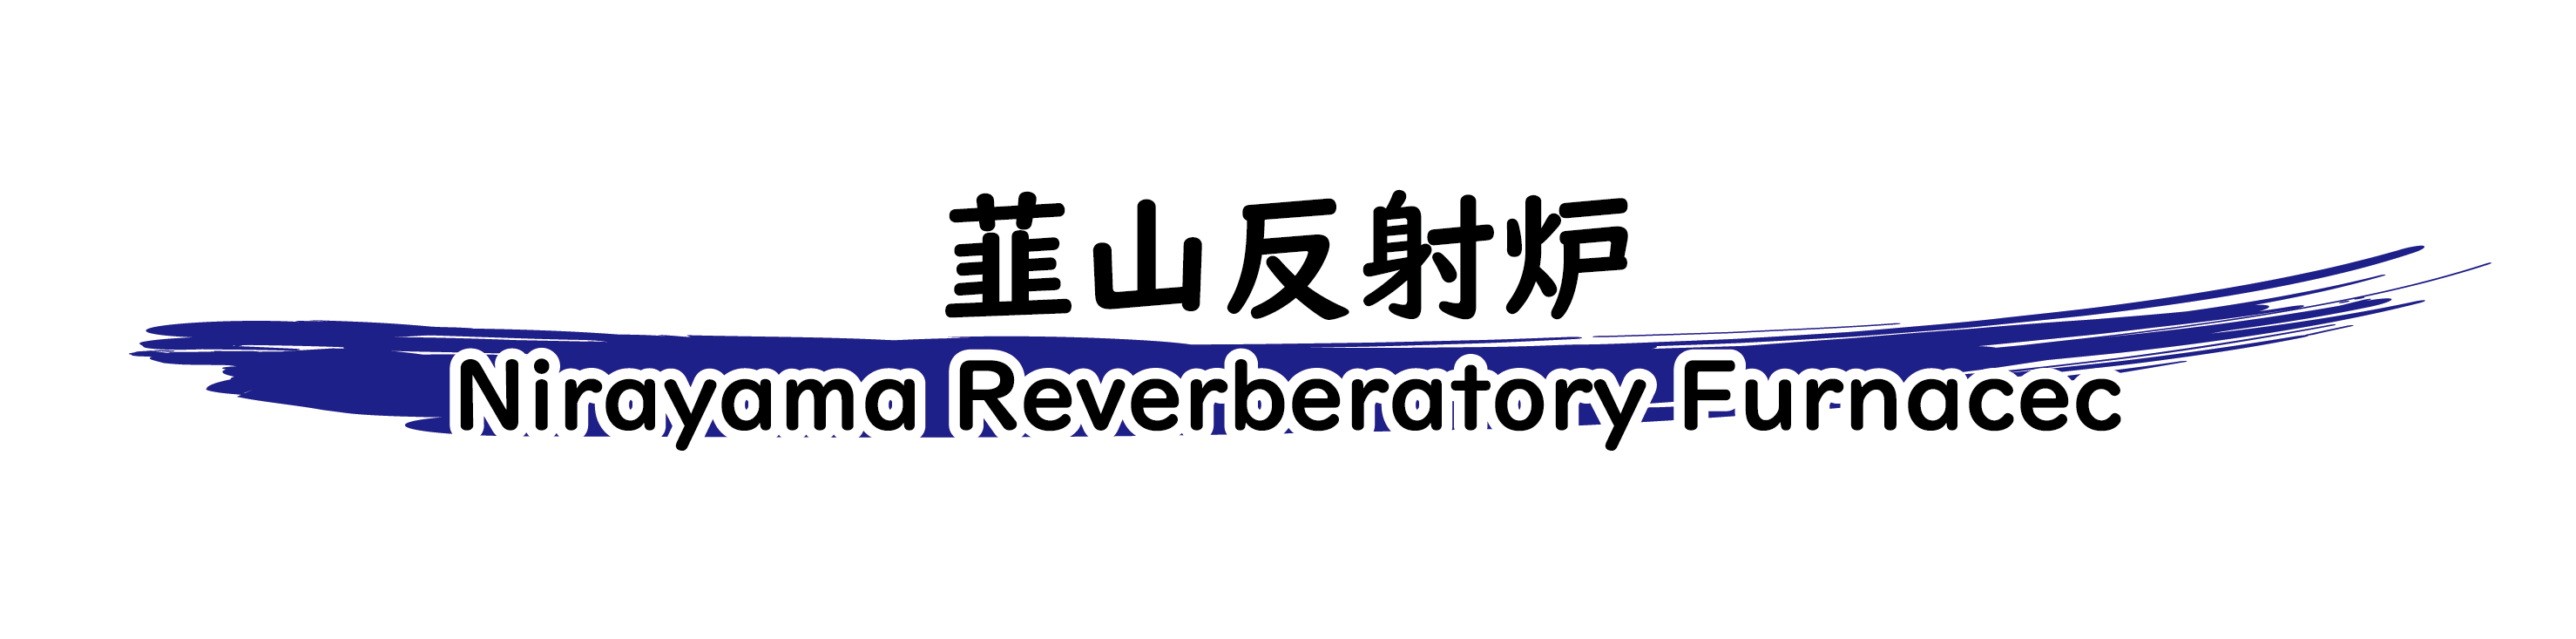 韮山反射炉 Nirayama Reverberatory Furnacec